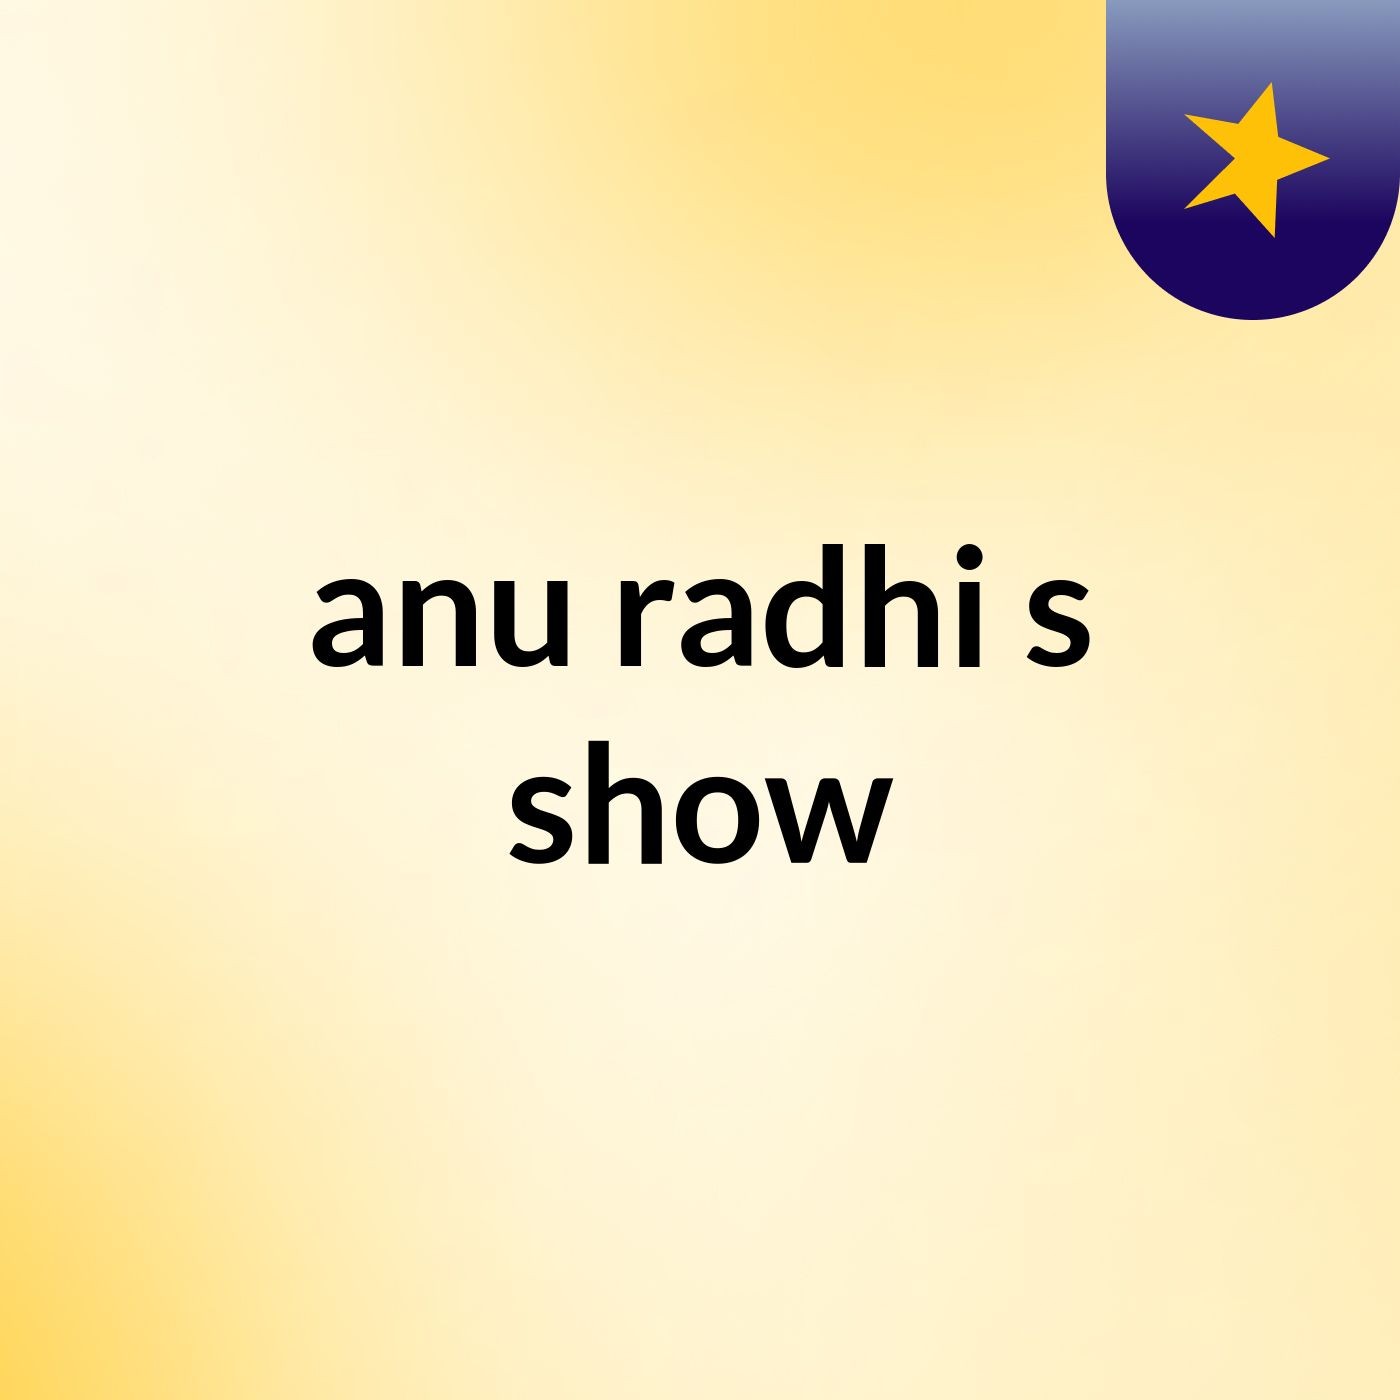 anu radhi's show